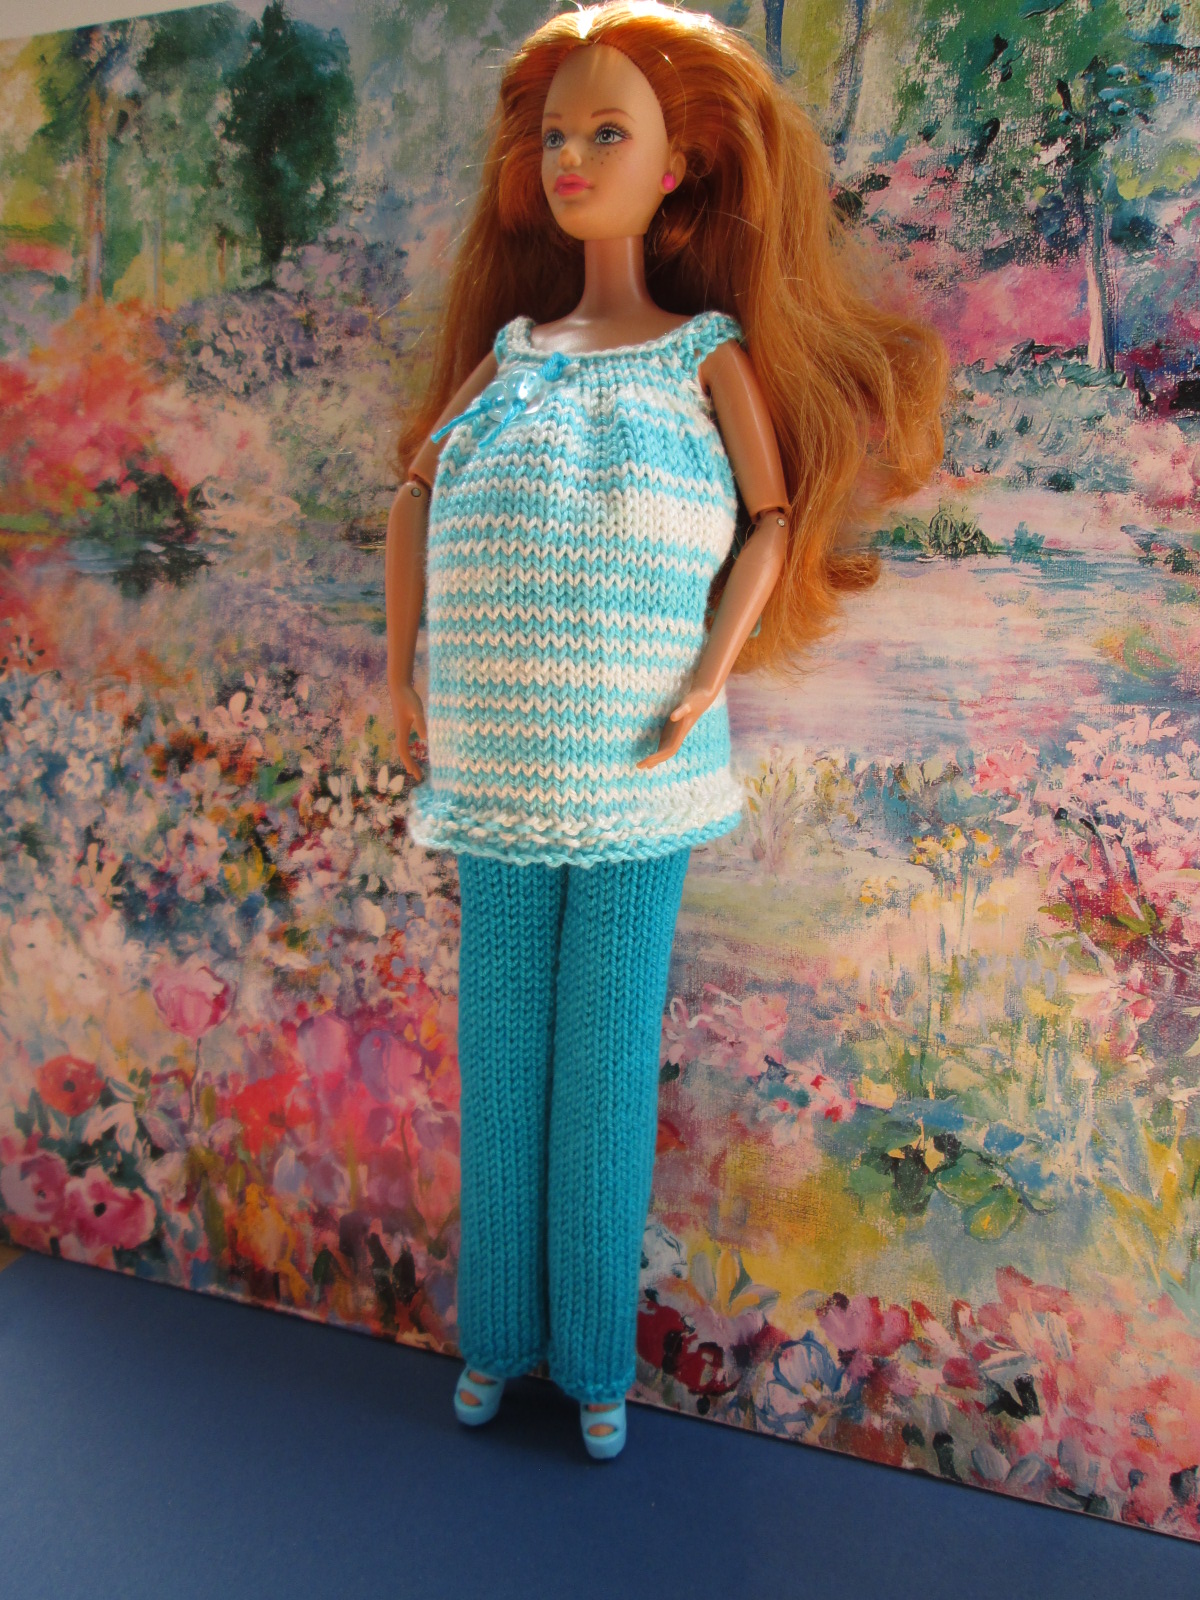 Barbie grossesse